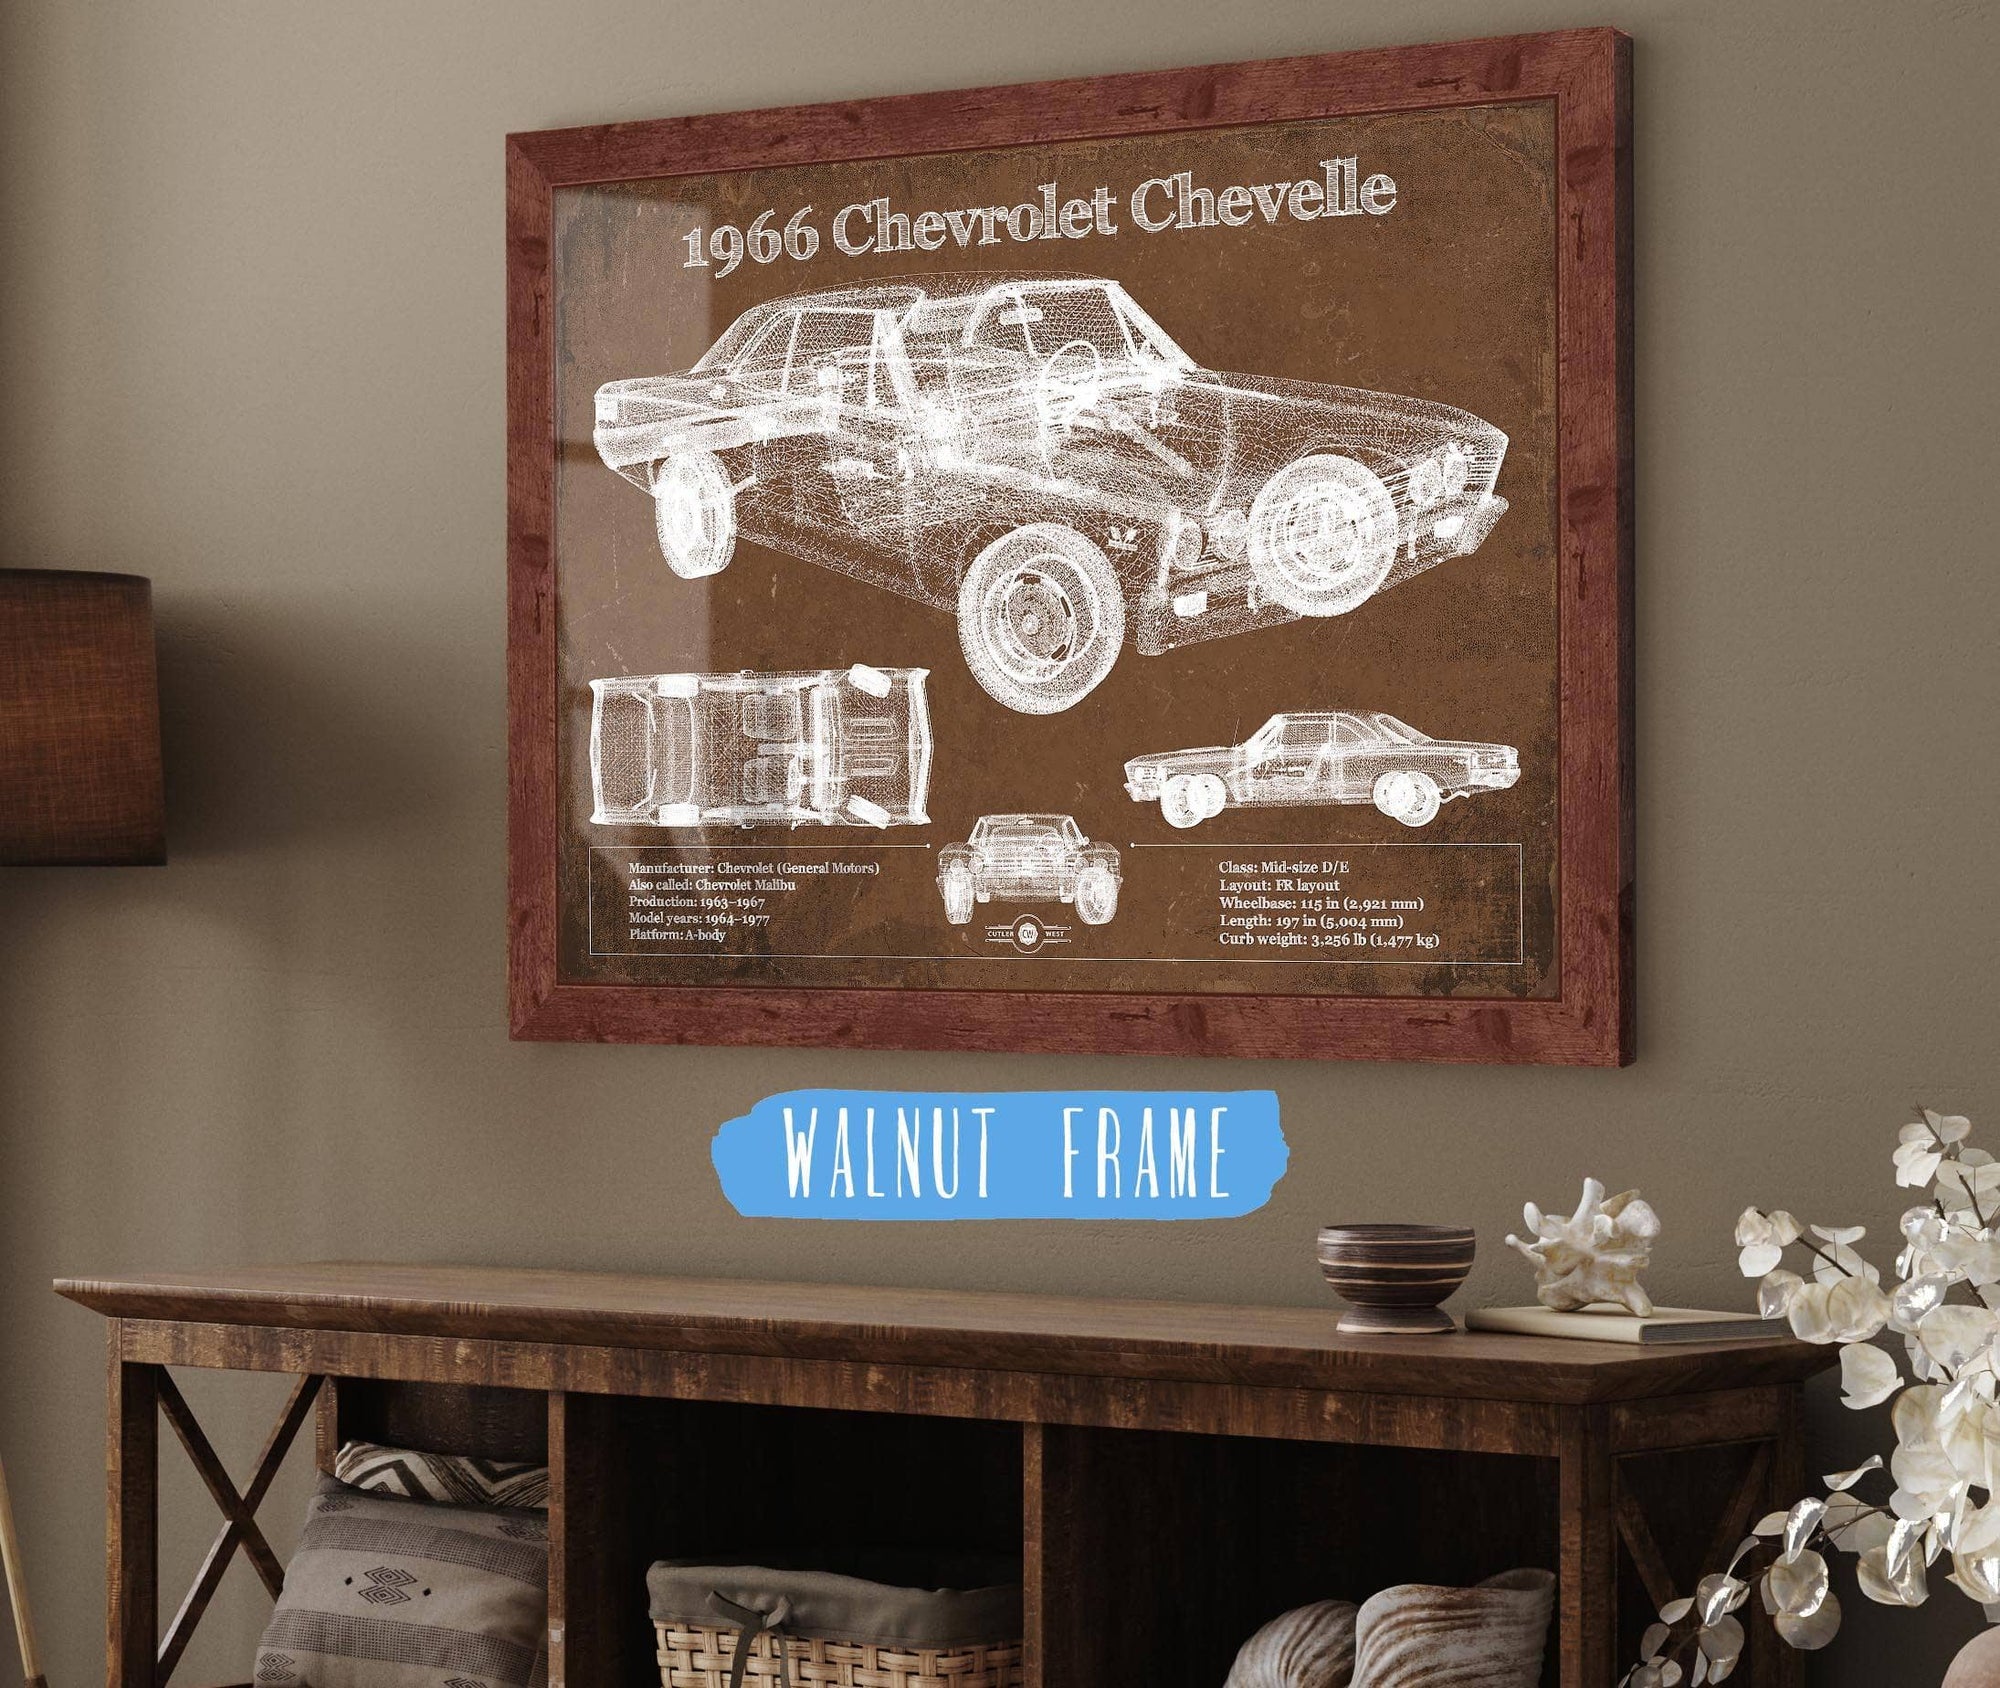 Cutler West Chevrolet Collection 1966 Chevelle Chevelle (Malibu) SS-396 Hardtop Coupe Original Blueprint Art